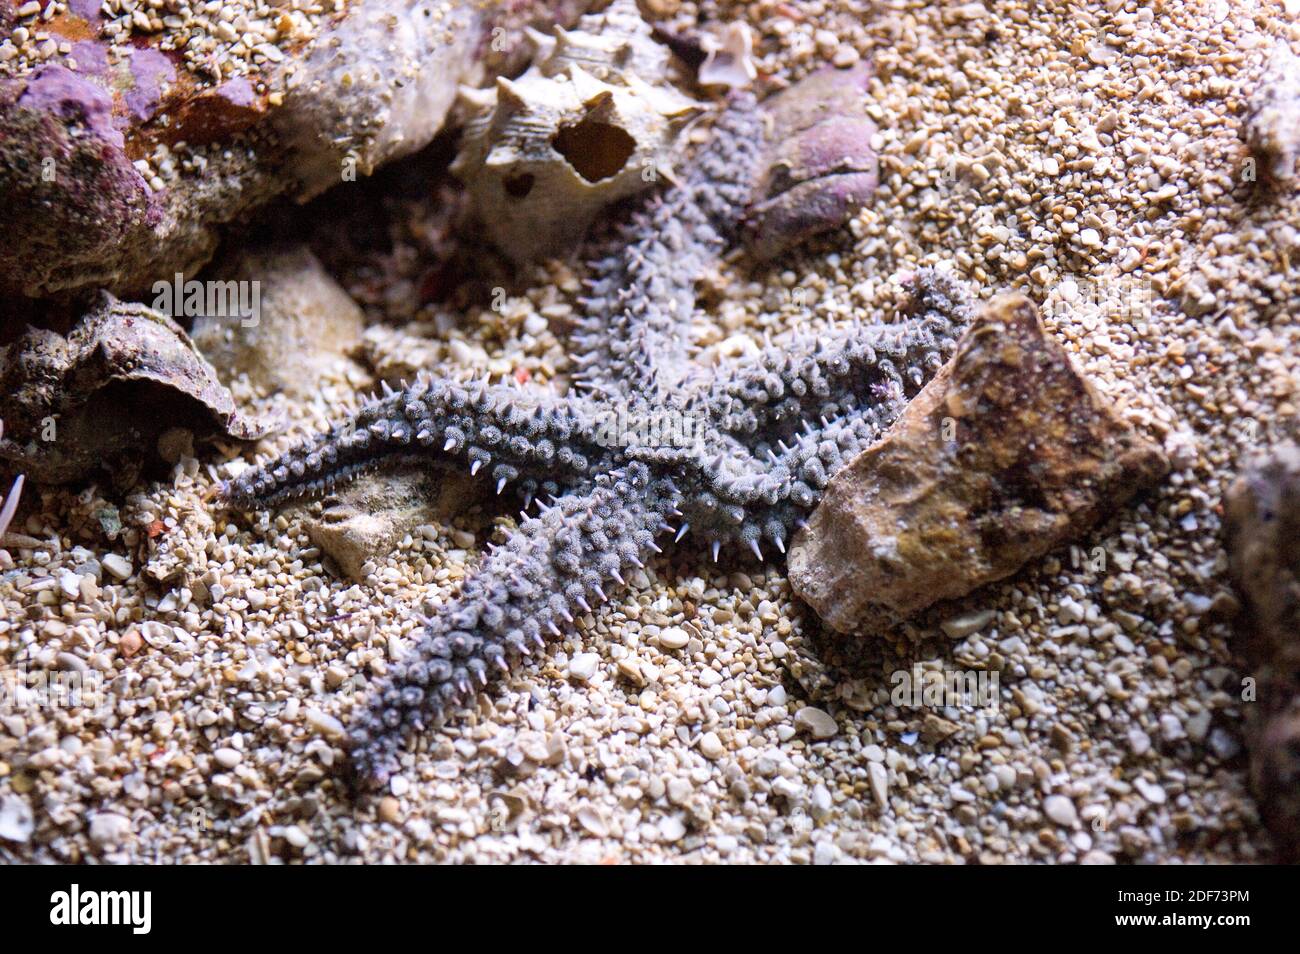 Spiny starfish (Marthasterias glacialis) is a sea star native to Mediterranean Sea and easter Atlantic Ocean. Stock Photo